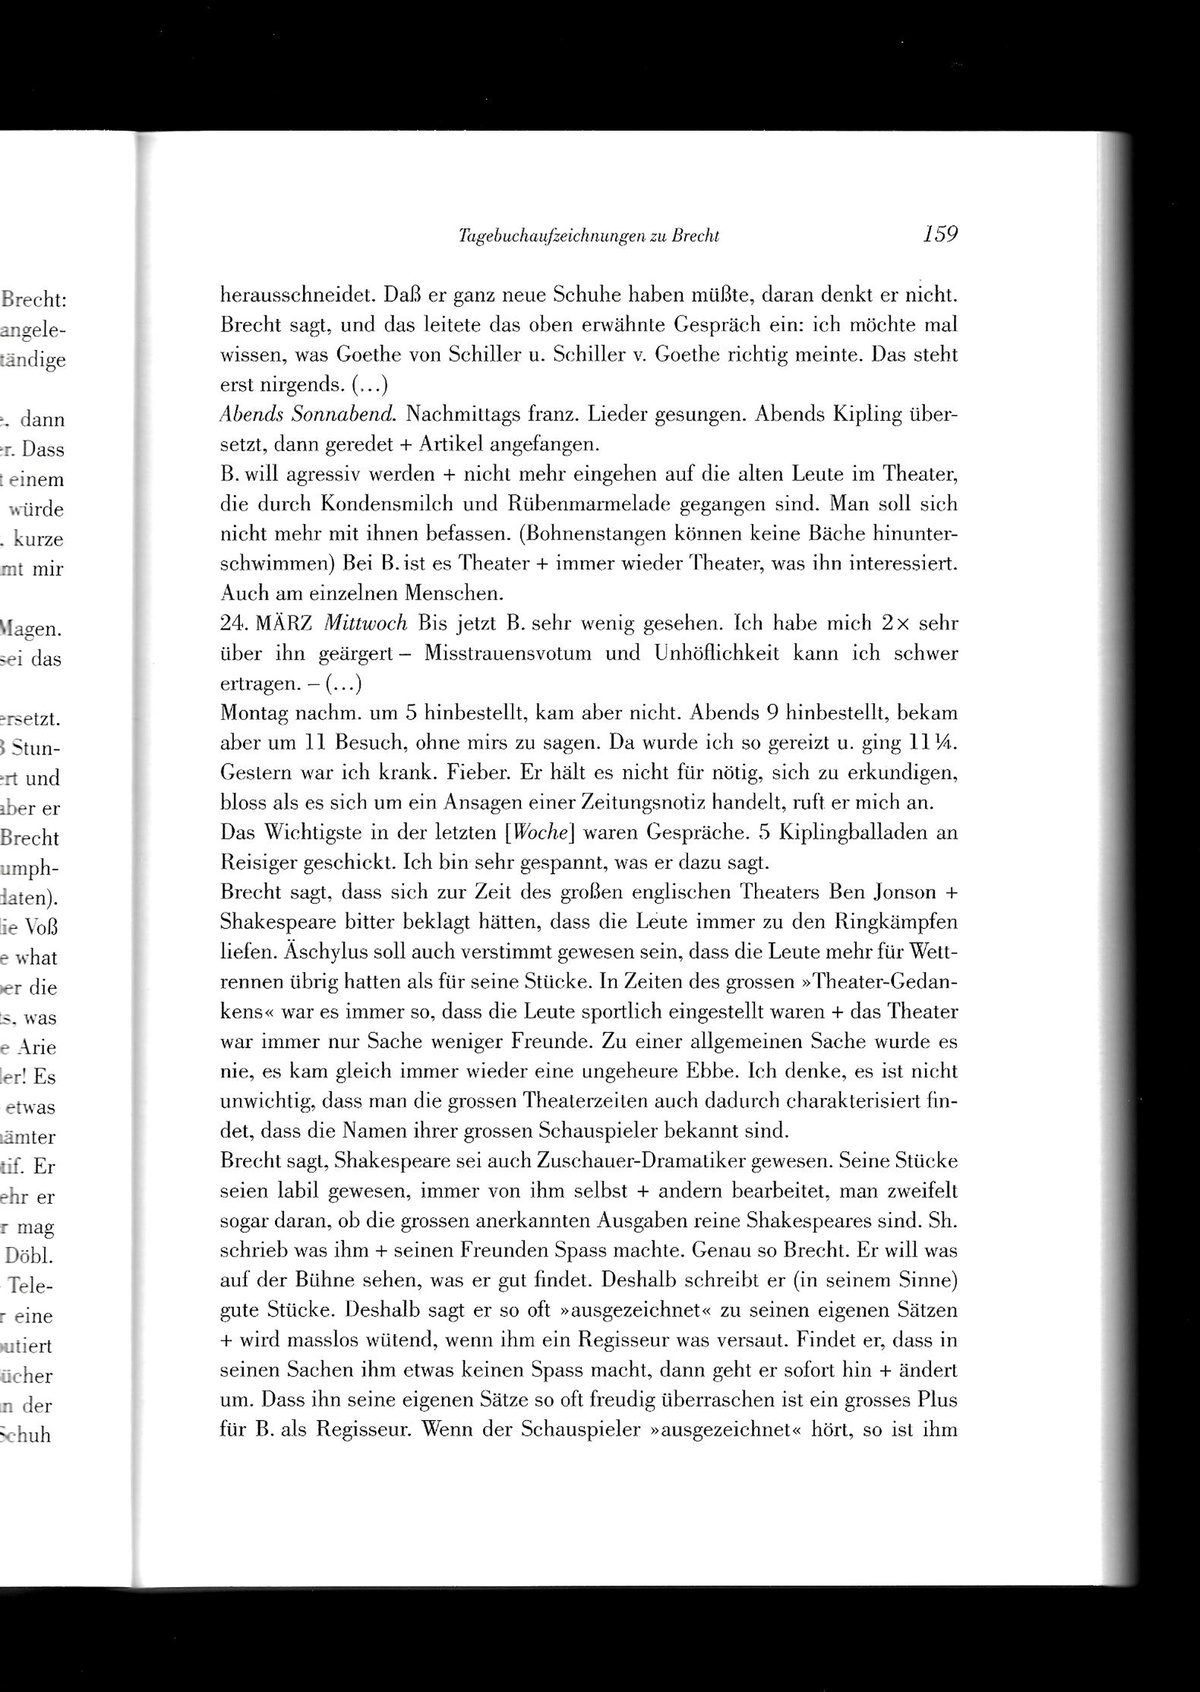 Elisabeth Hauptmann 2 × sehr über ihn geärgert. Diary notes on Brecht. With a prefatory note by Martin Kölbel and Peter Villwock.In Sinn und Form, Heft 2/2021, p. 155-163, here p. 159